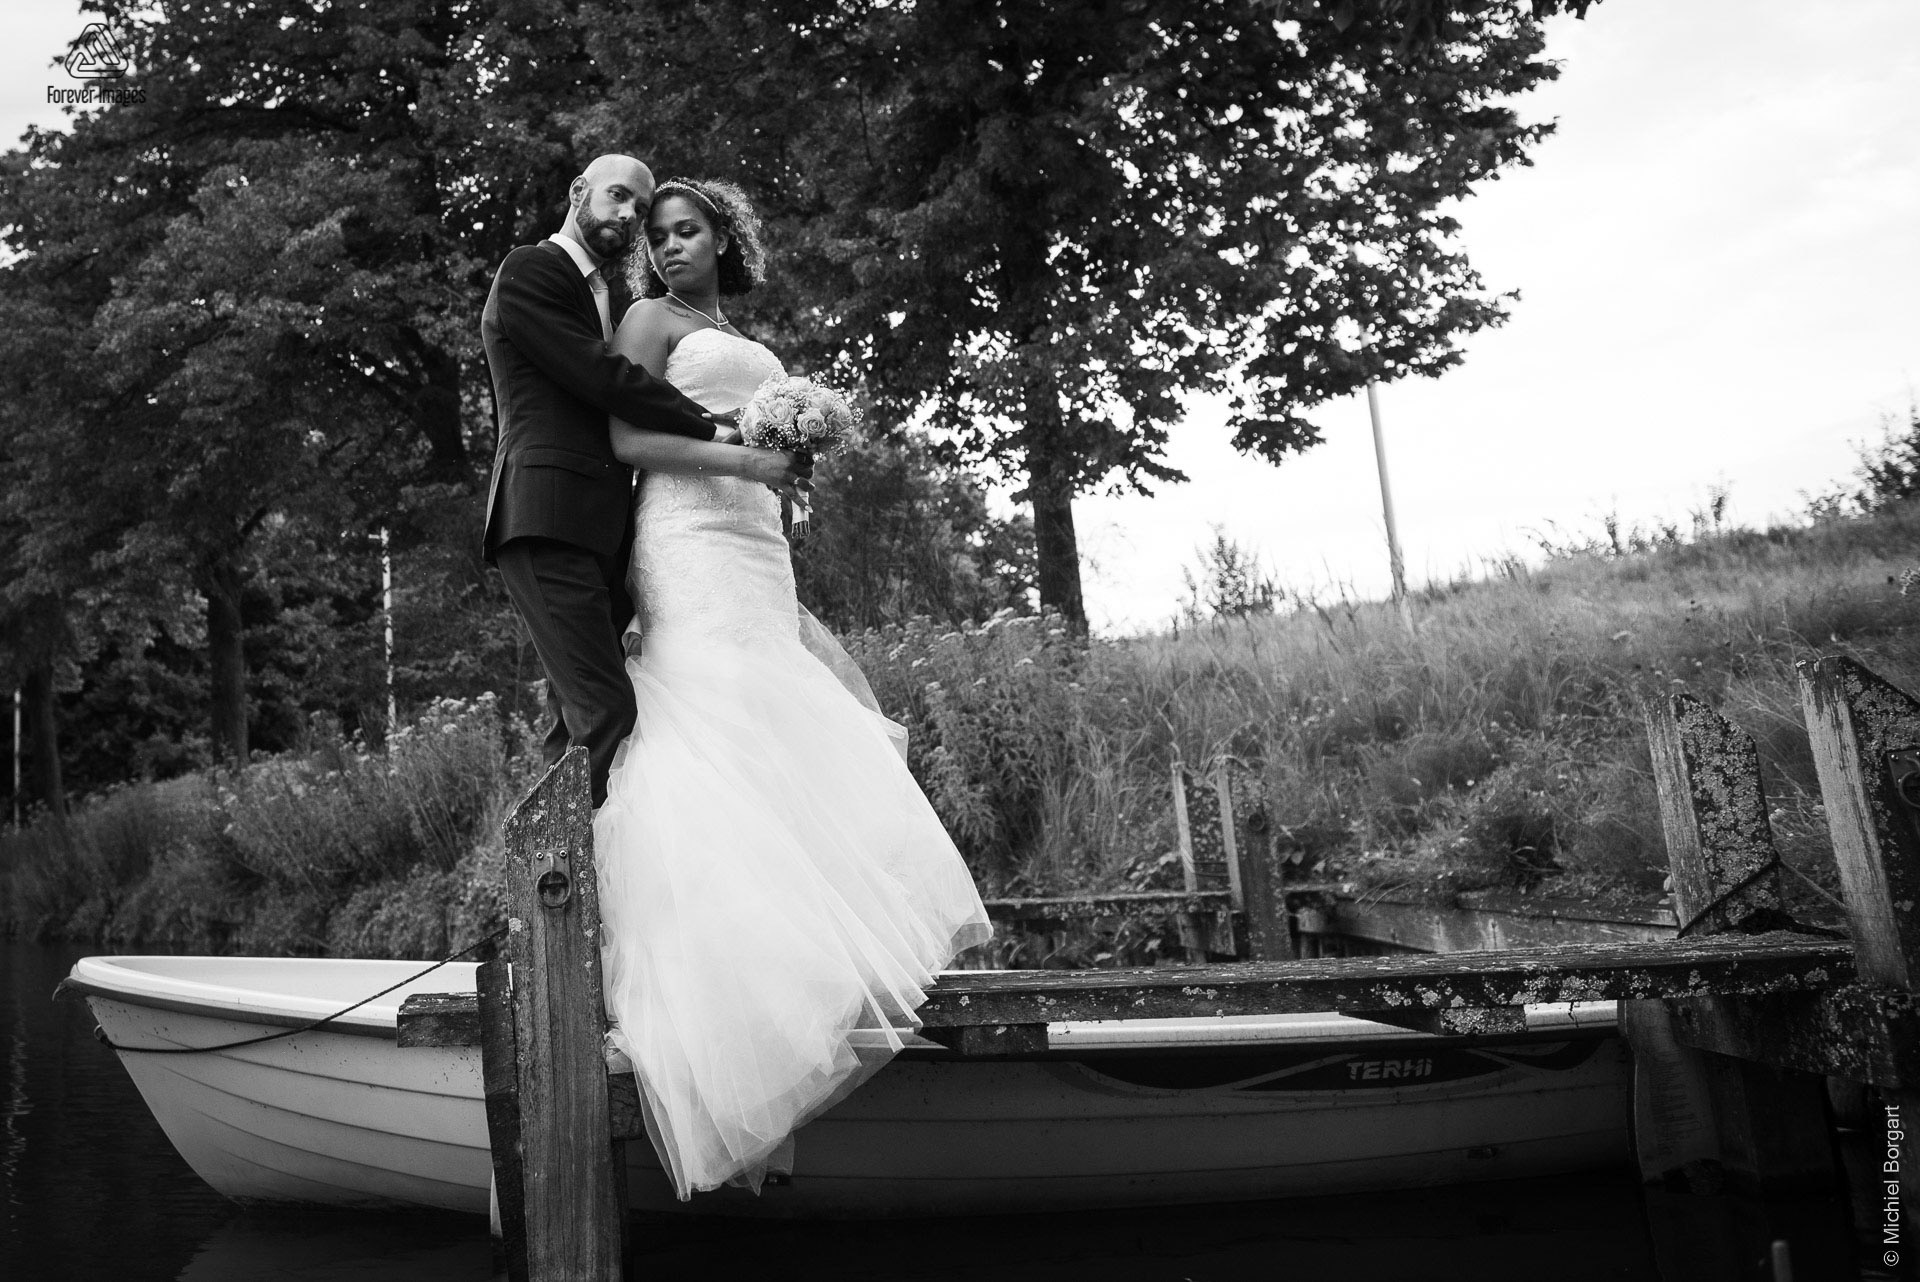 Bridal photo black and white next to the wedding boat | Kamiel Elseric | Wedding Photographer Michiel Borgart - Forever Images.